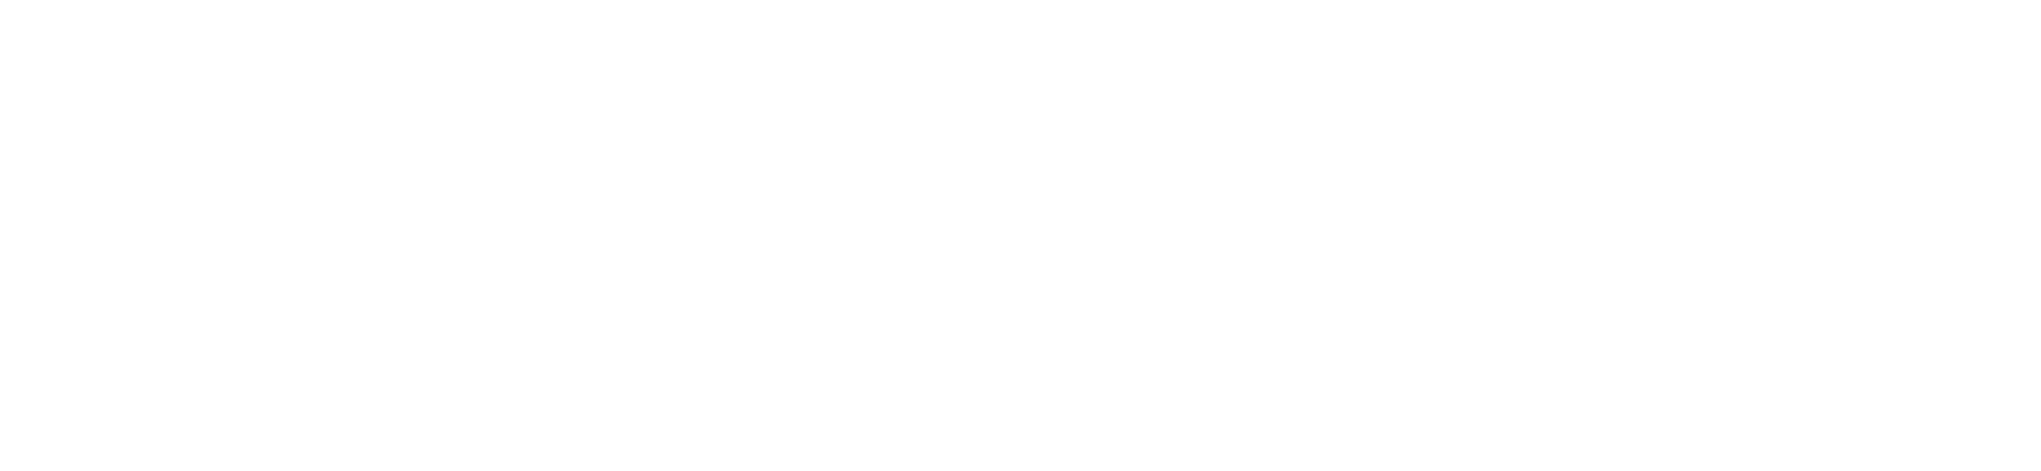 Nelson-Bostock-UNLIMITED-logo-white